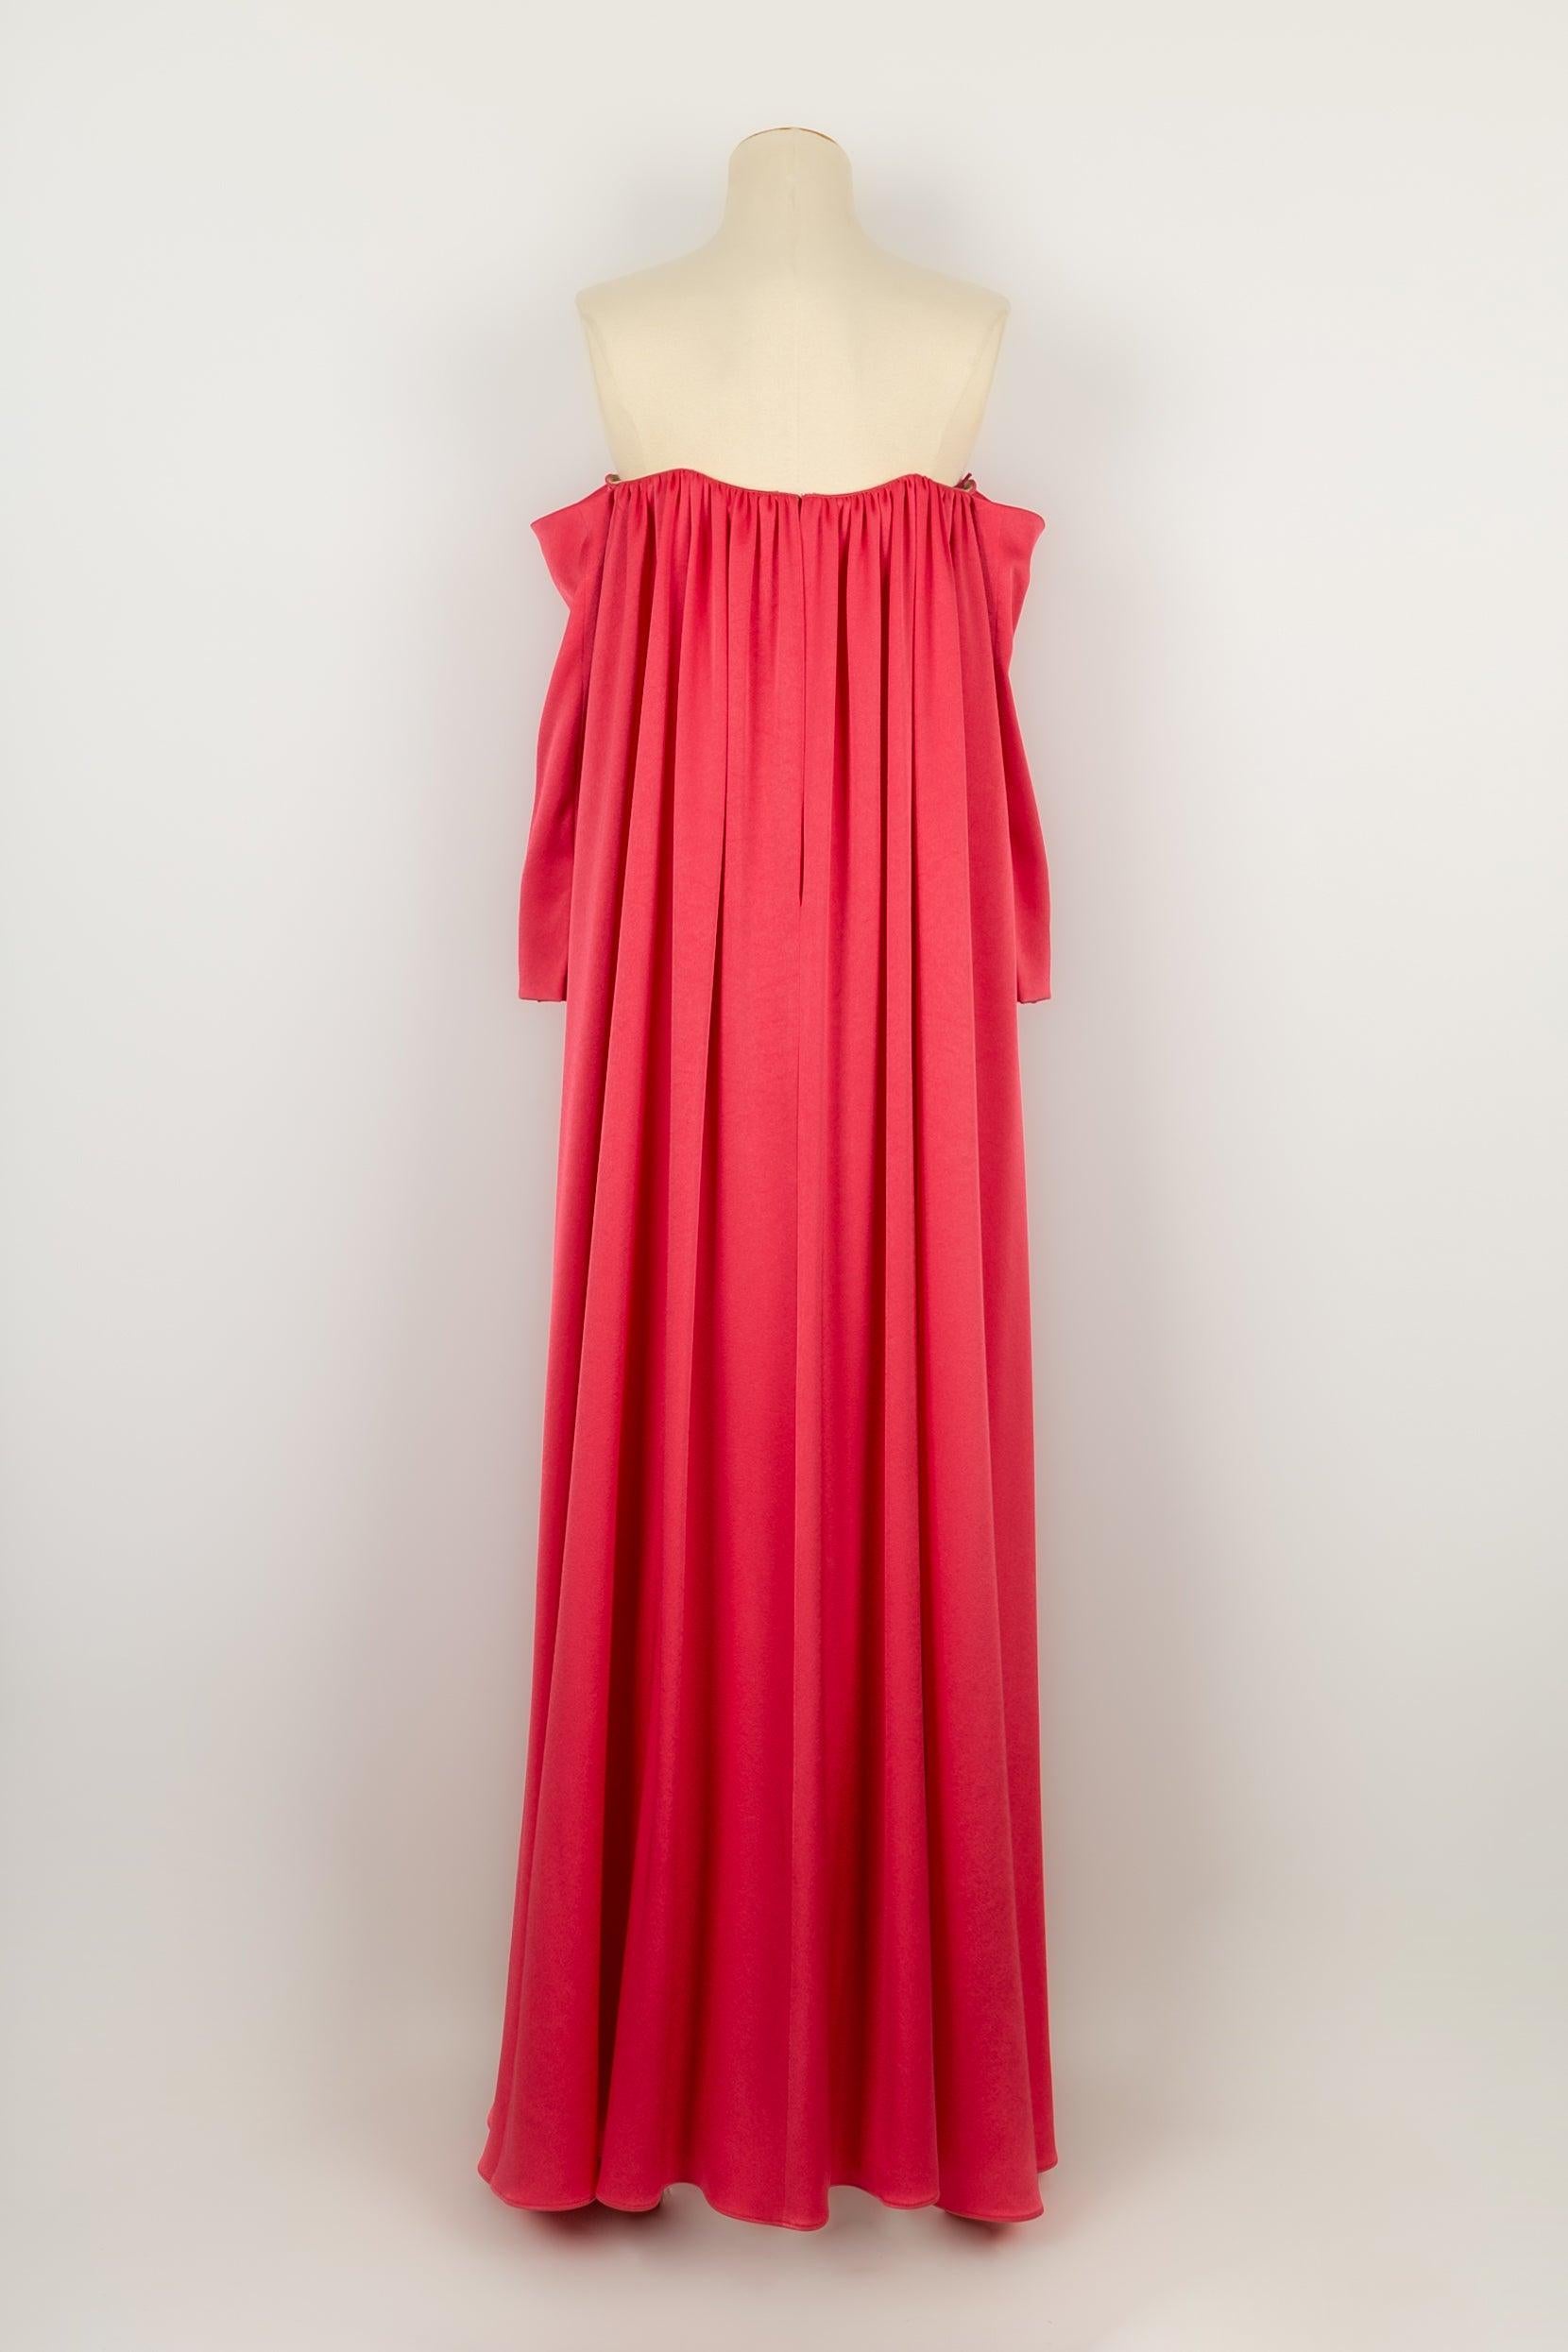 Paule Ka Maxi Long Dress in Pink Duchess Satin, 2022 In Excellent Condition For Sale In SAINT-OUEN-SUR-SEINE, FR